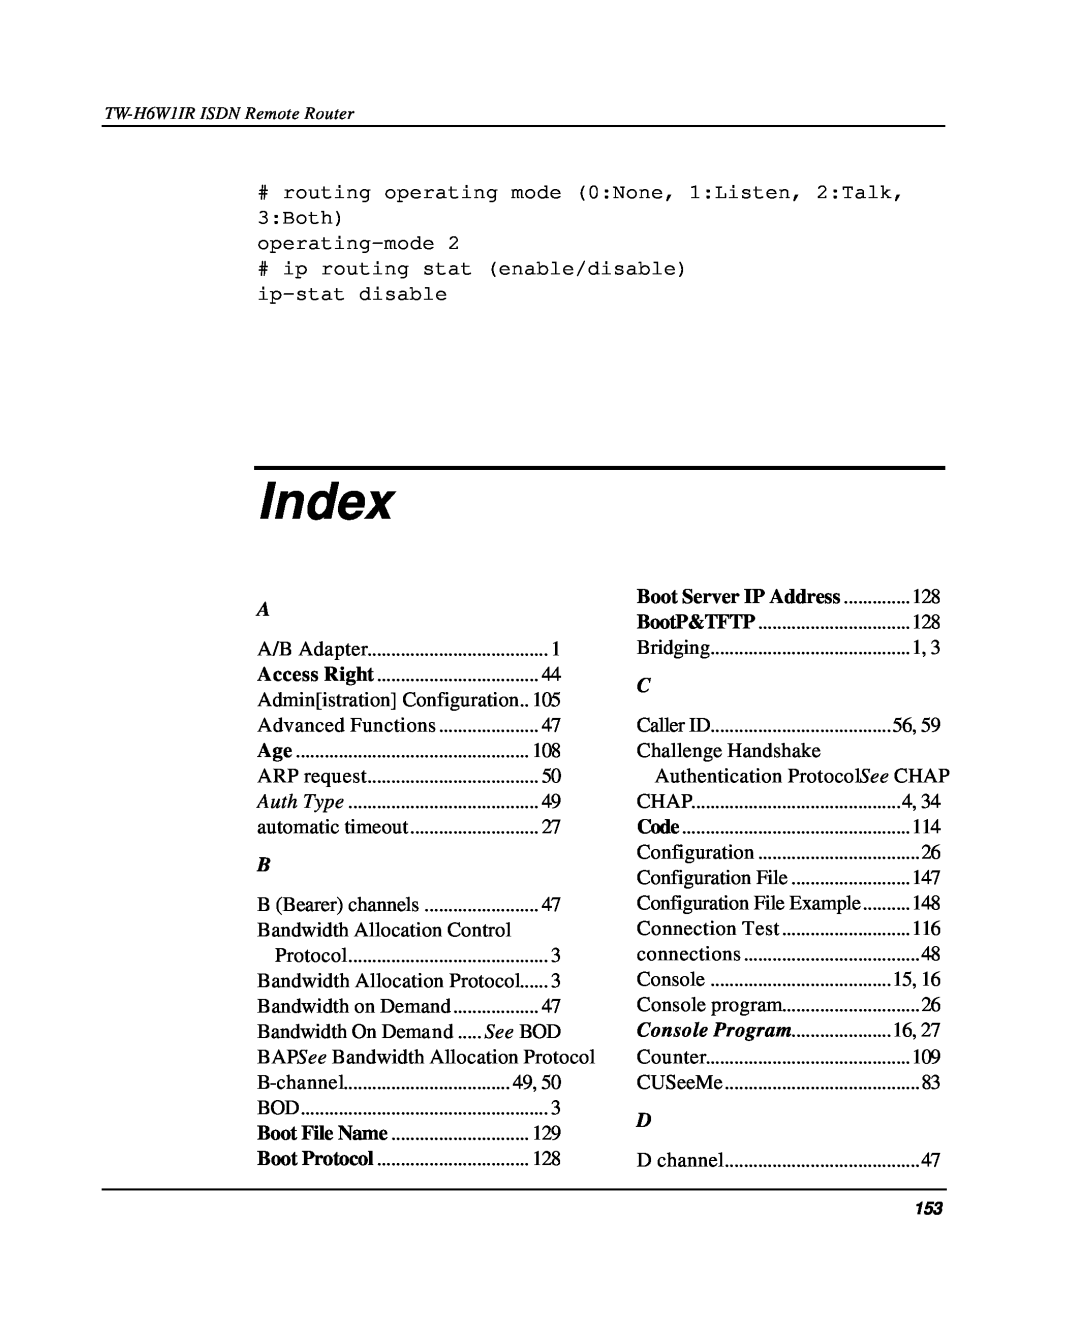 TRENDnet TW-H6W1IR manual Index 